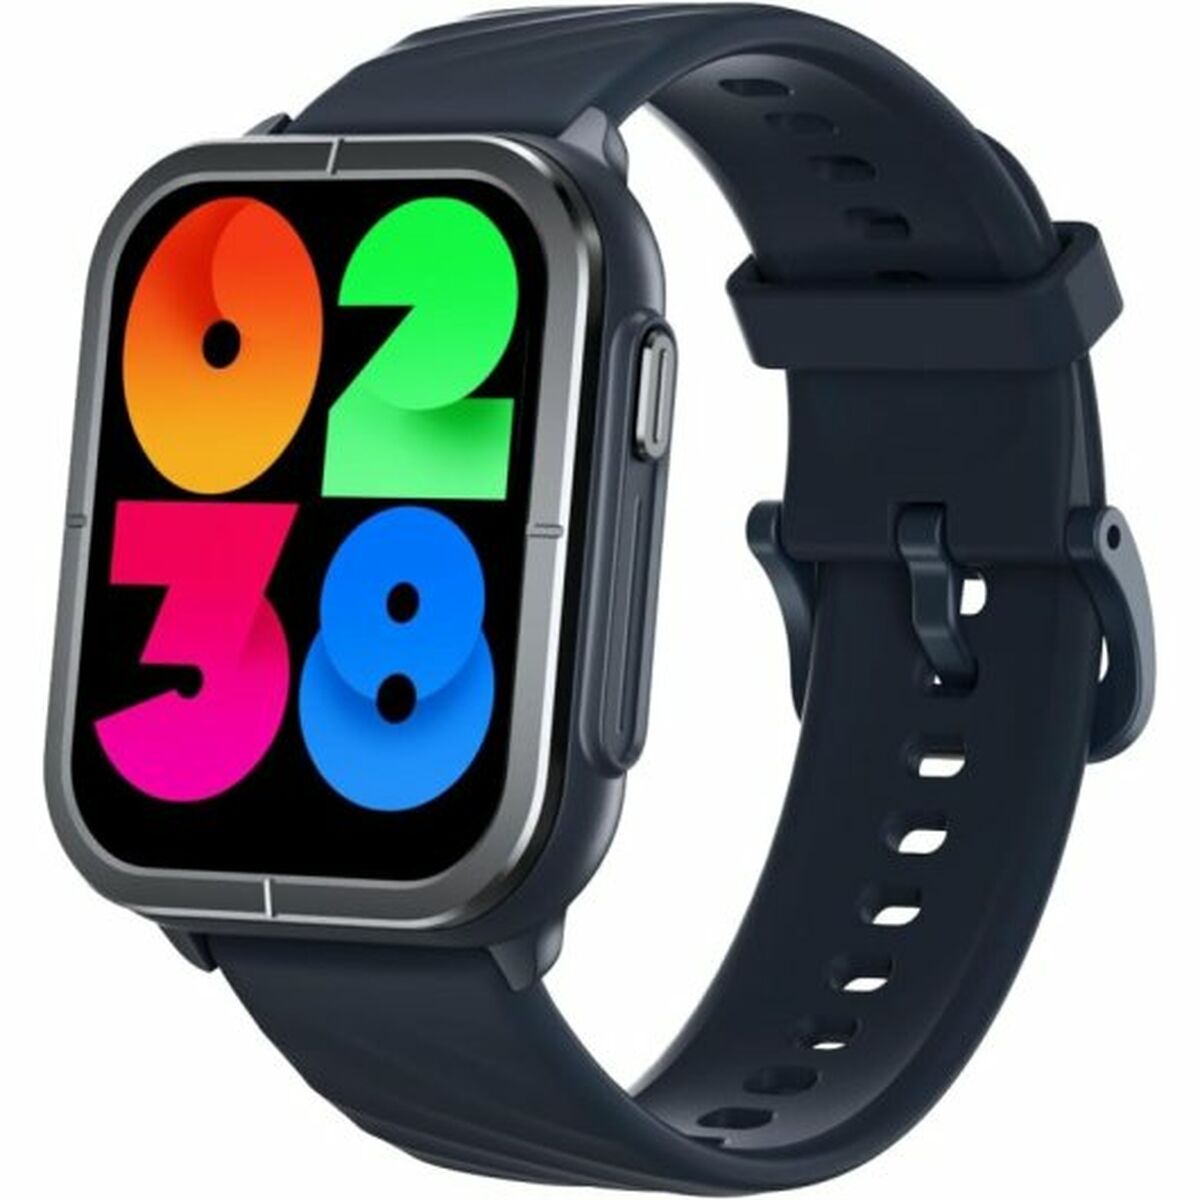 Kaufe Smartwatch Mibro C3 Blau bei AWK Flagship um € 62.00